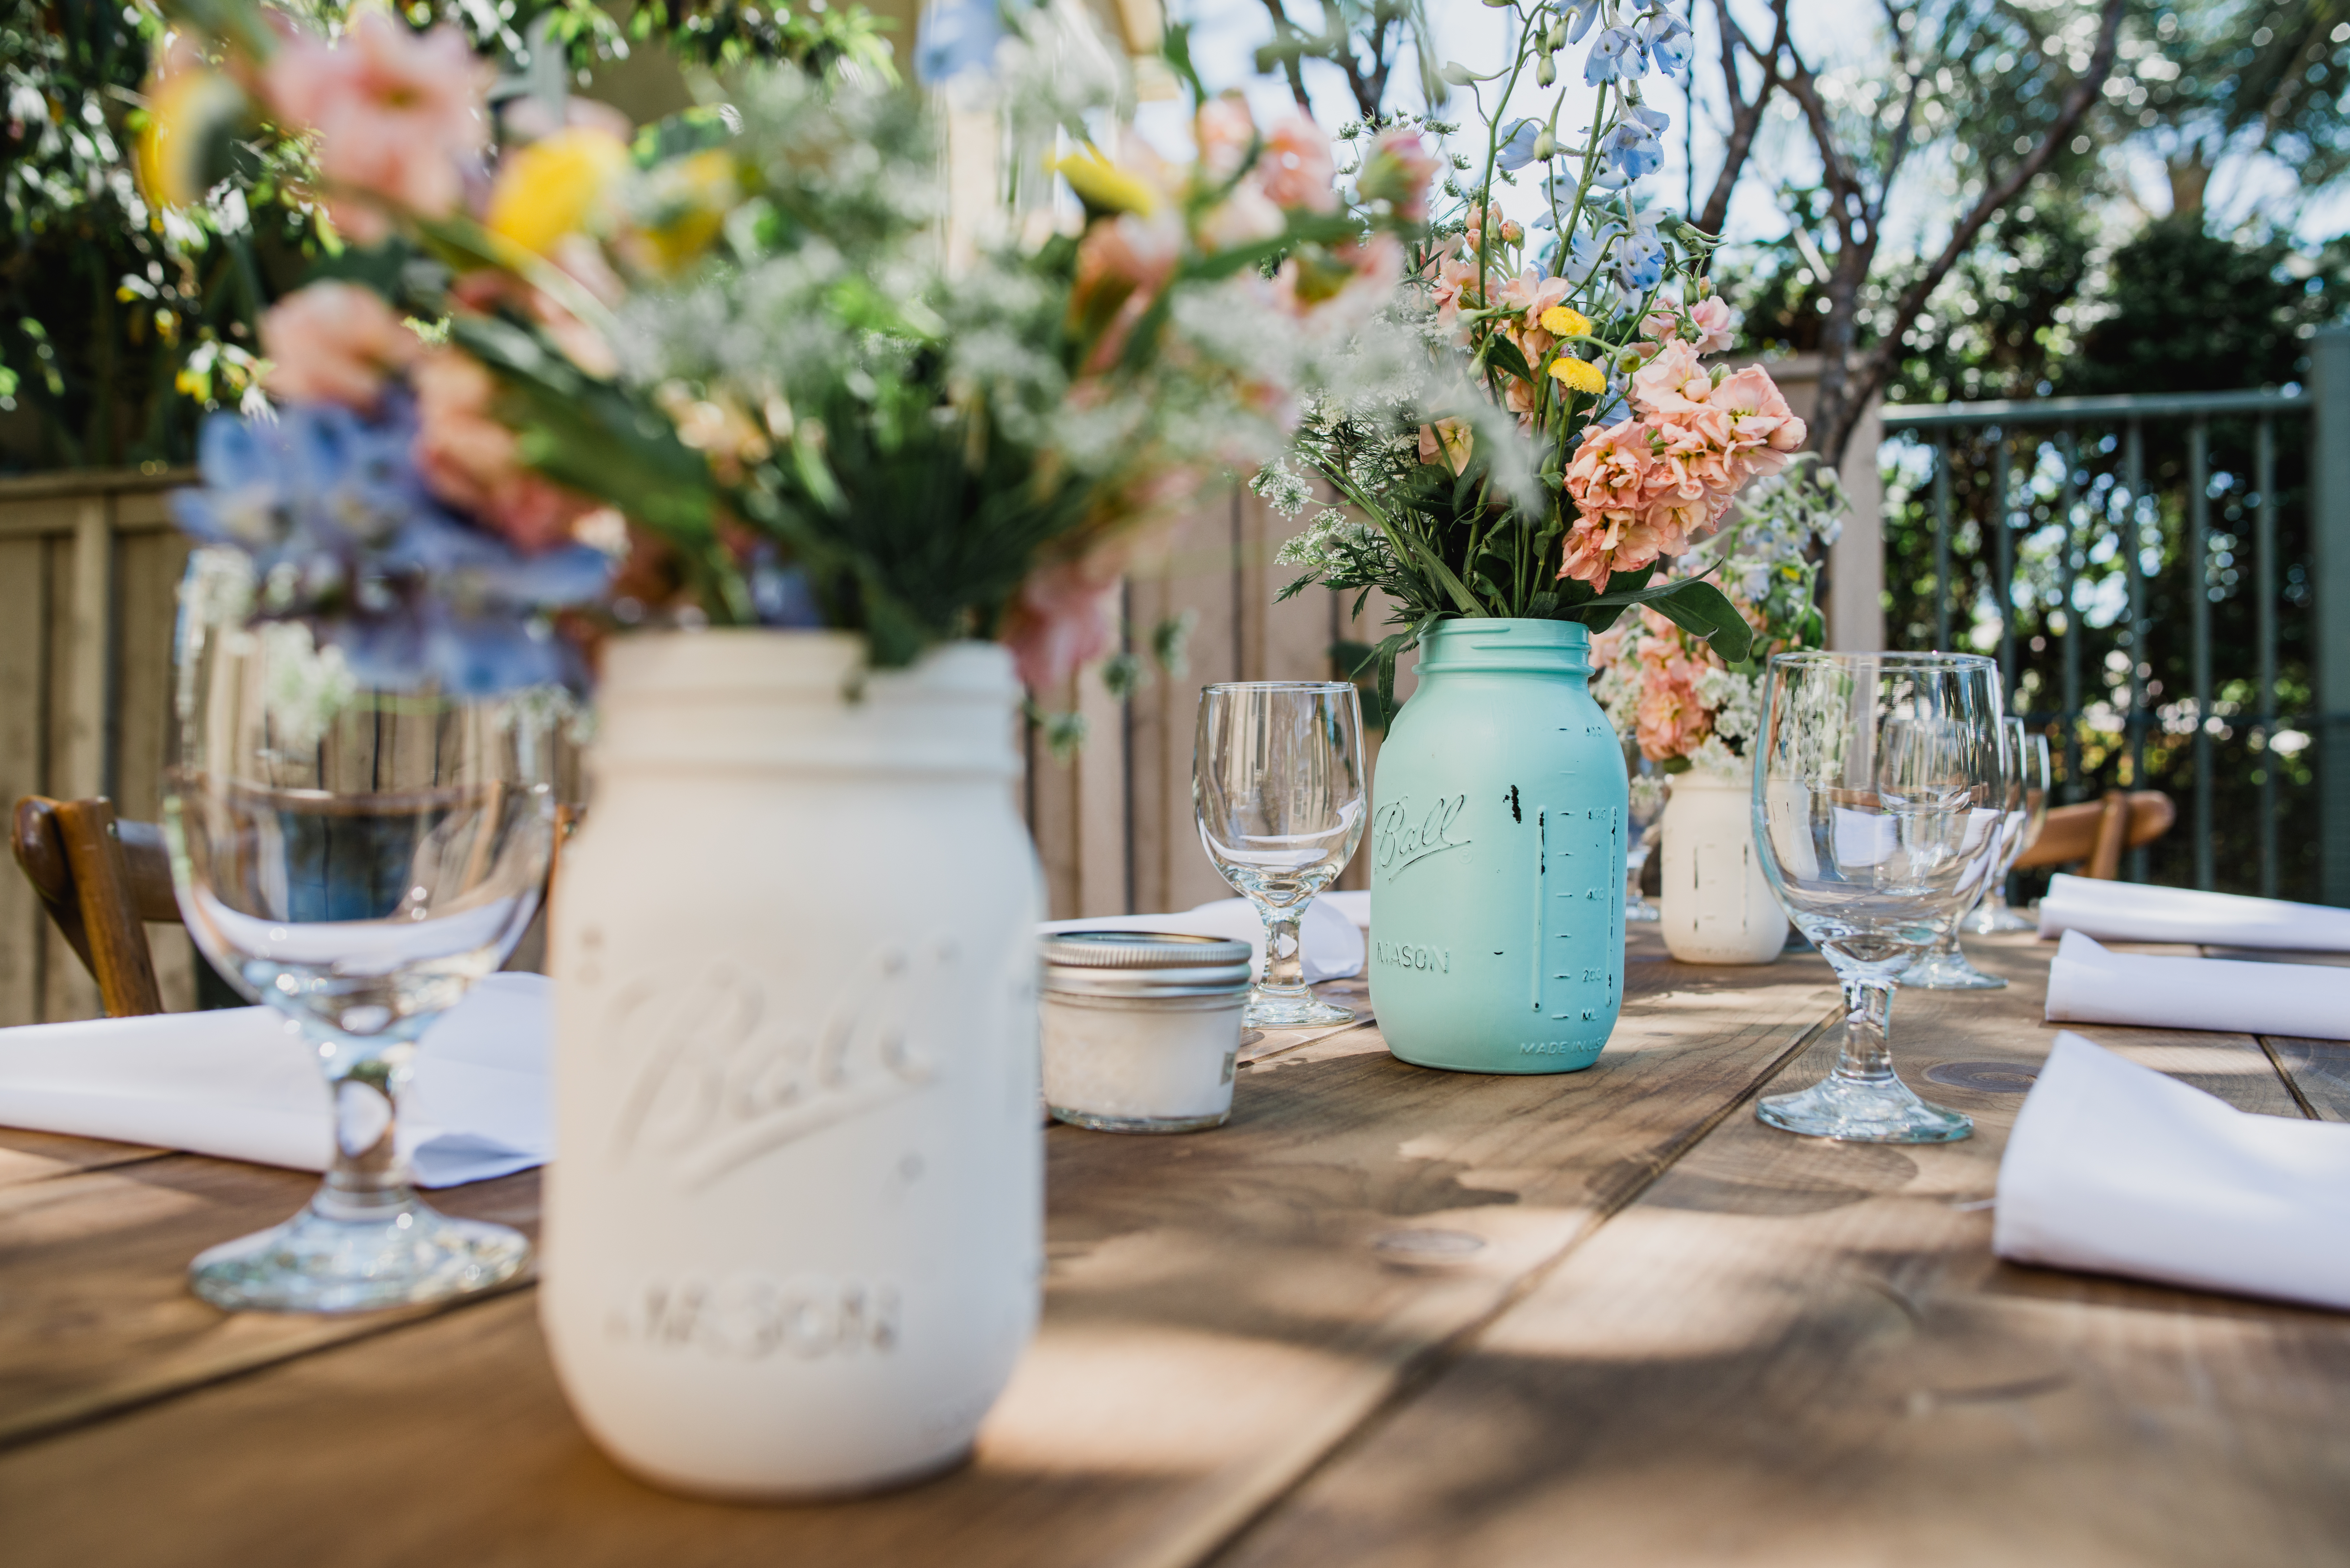 Mason Jar wedding detailsat a Bohemian Backyard in Rancho Bernardo CA by Kylie Rae Photography